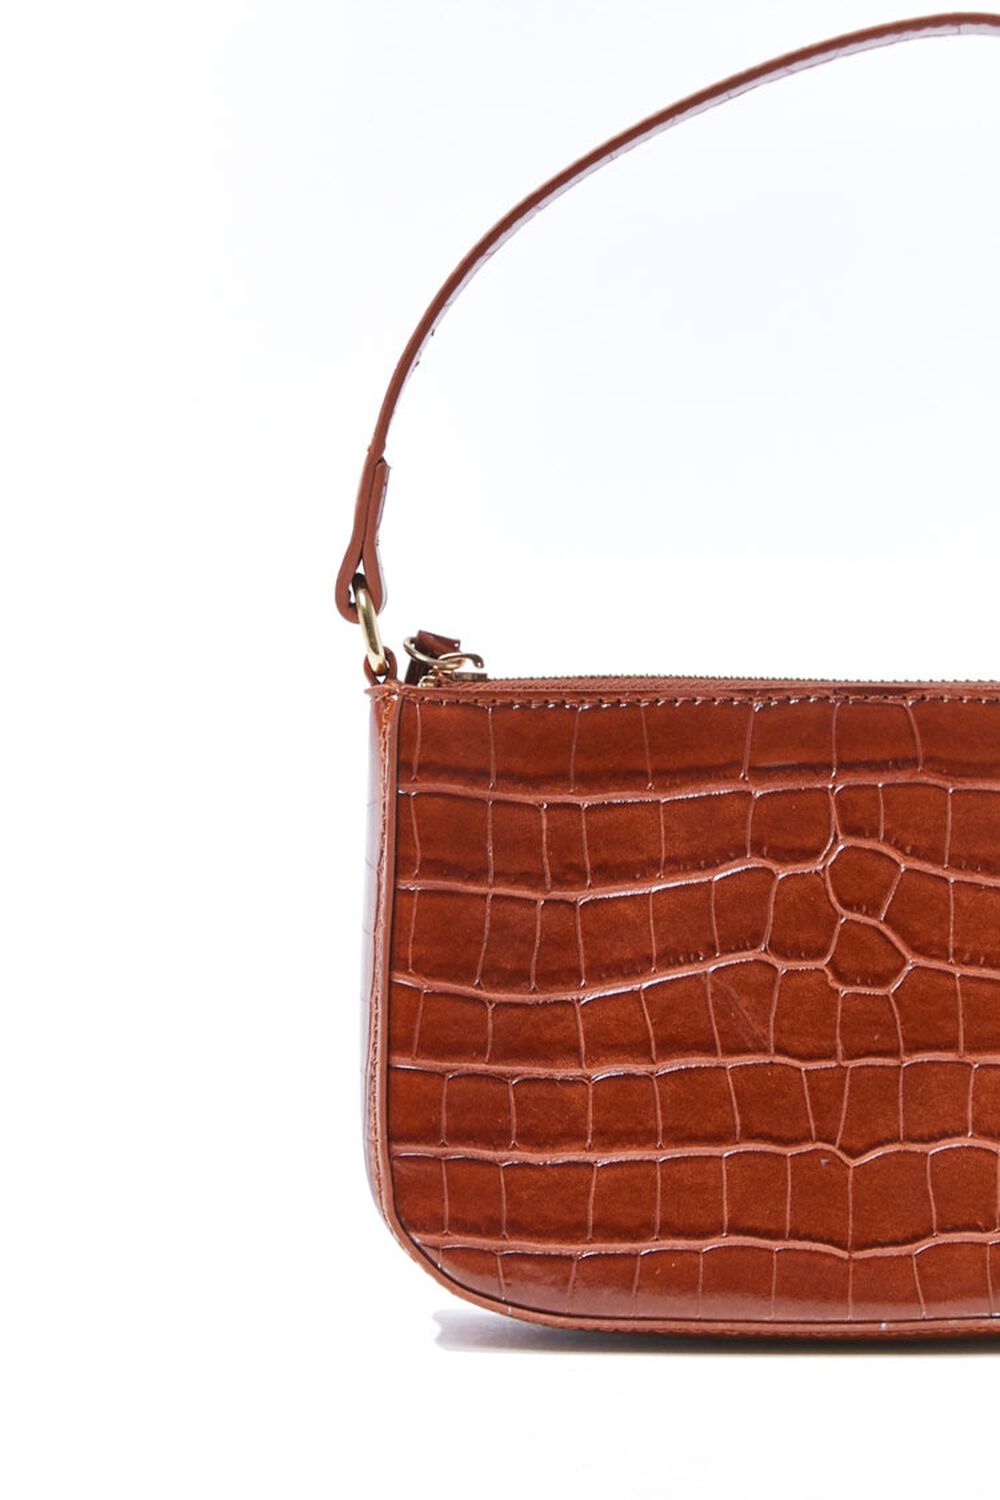 TAN Faux Croc Leather Handbag, image 2